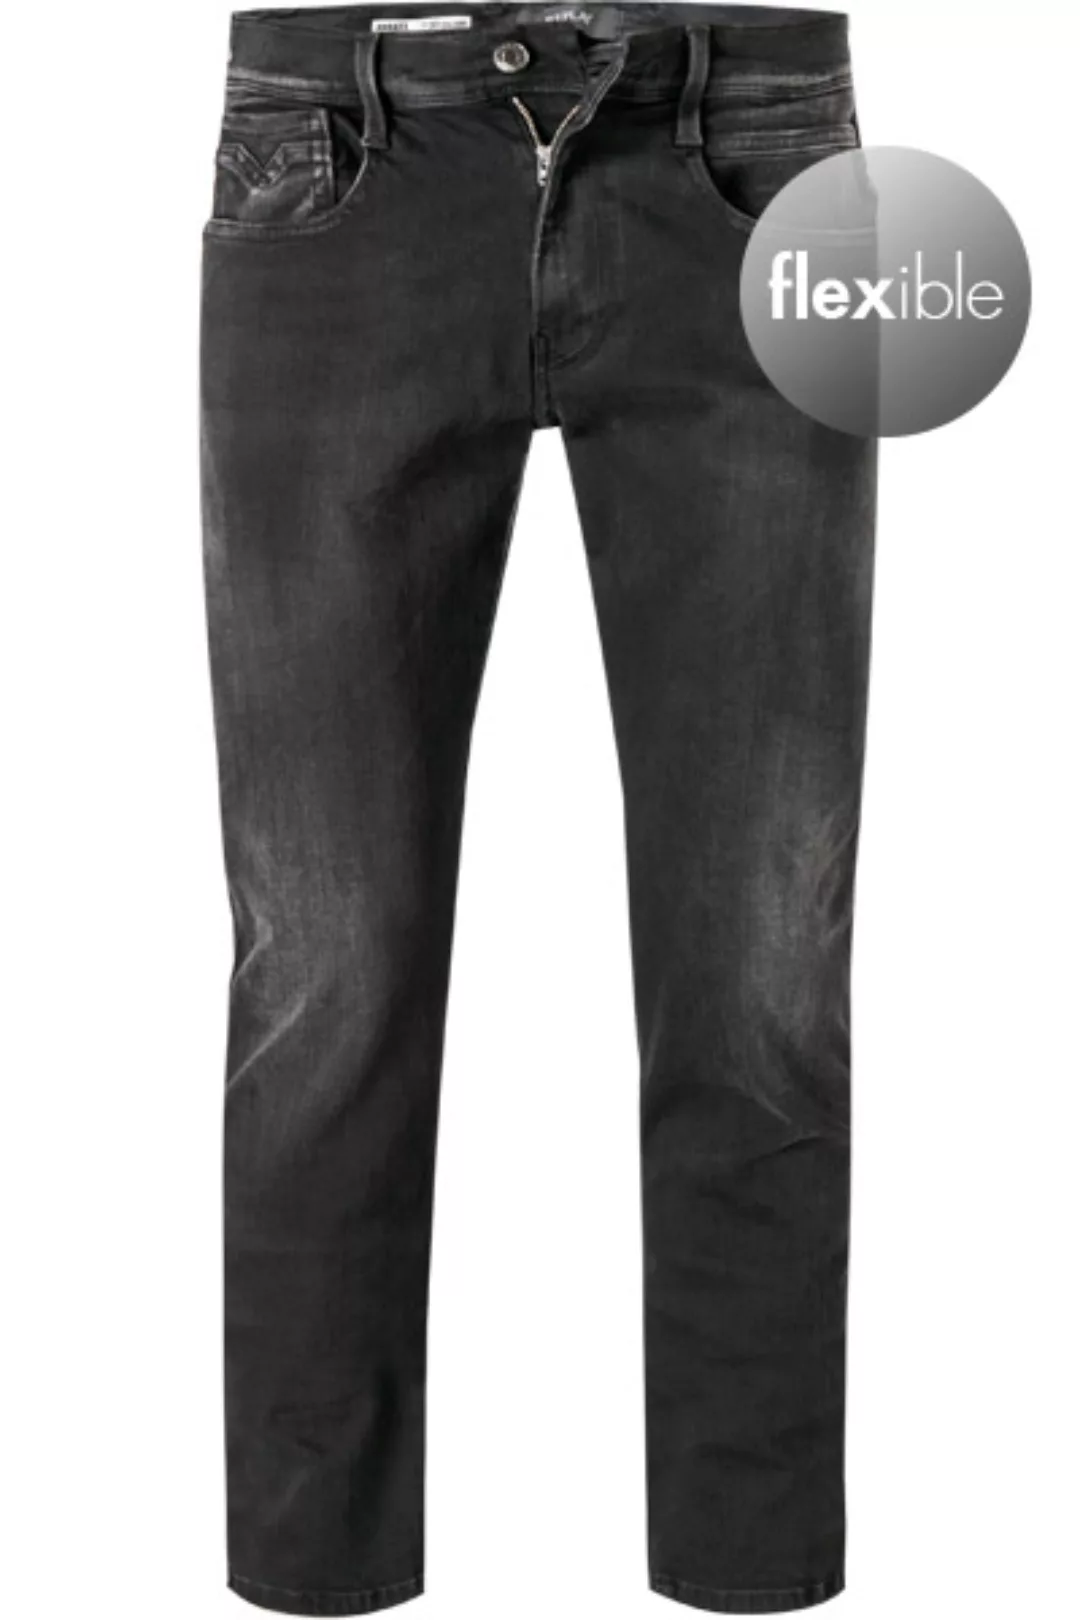 Replay Jeans Anbass M914Y.000.661 WB0/098 günstig online kaufen